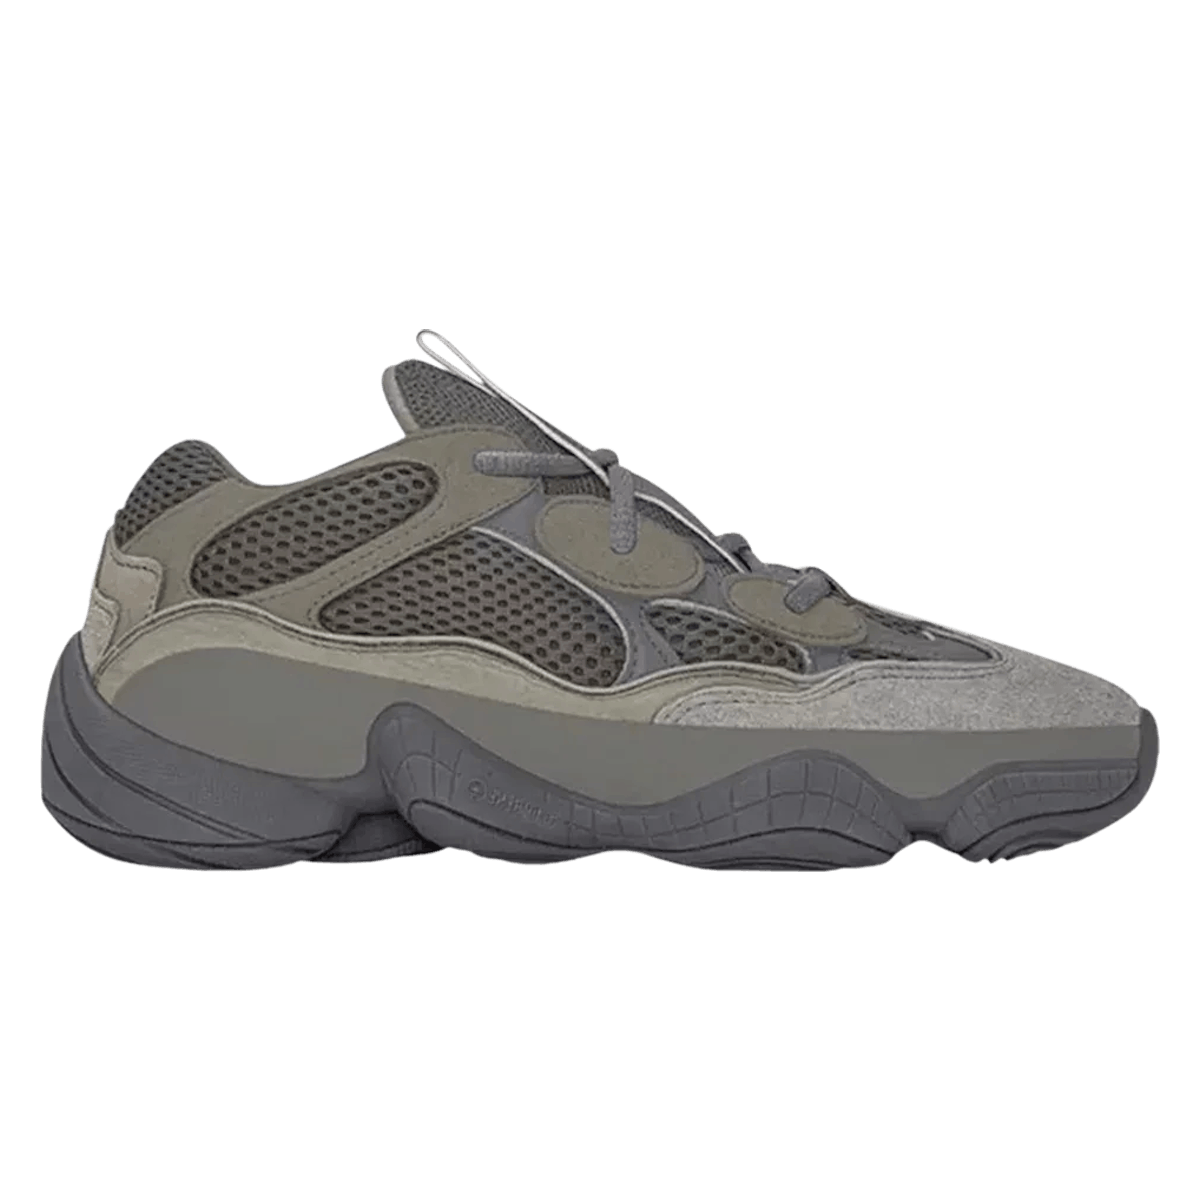 Adidas Yeezy 500 "Granite"